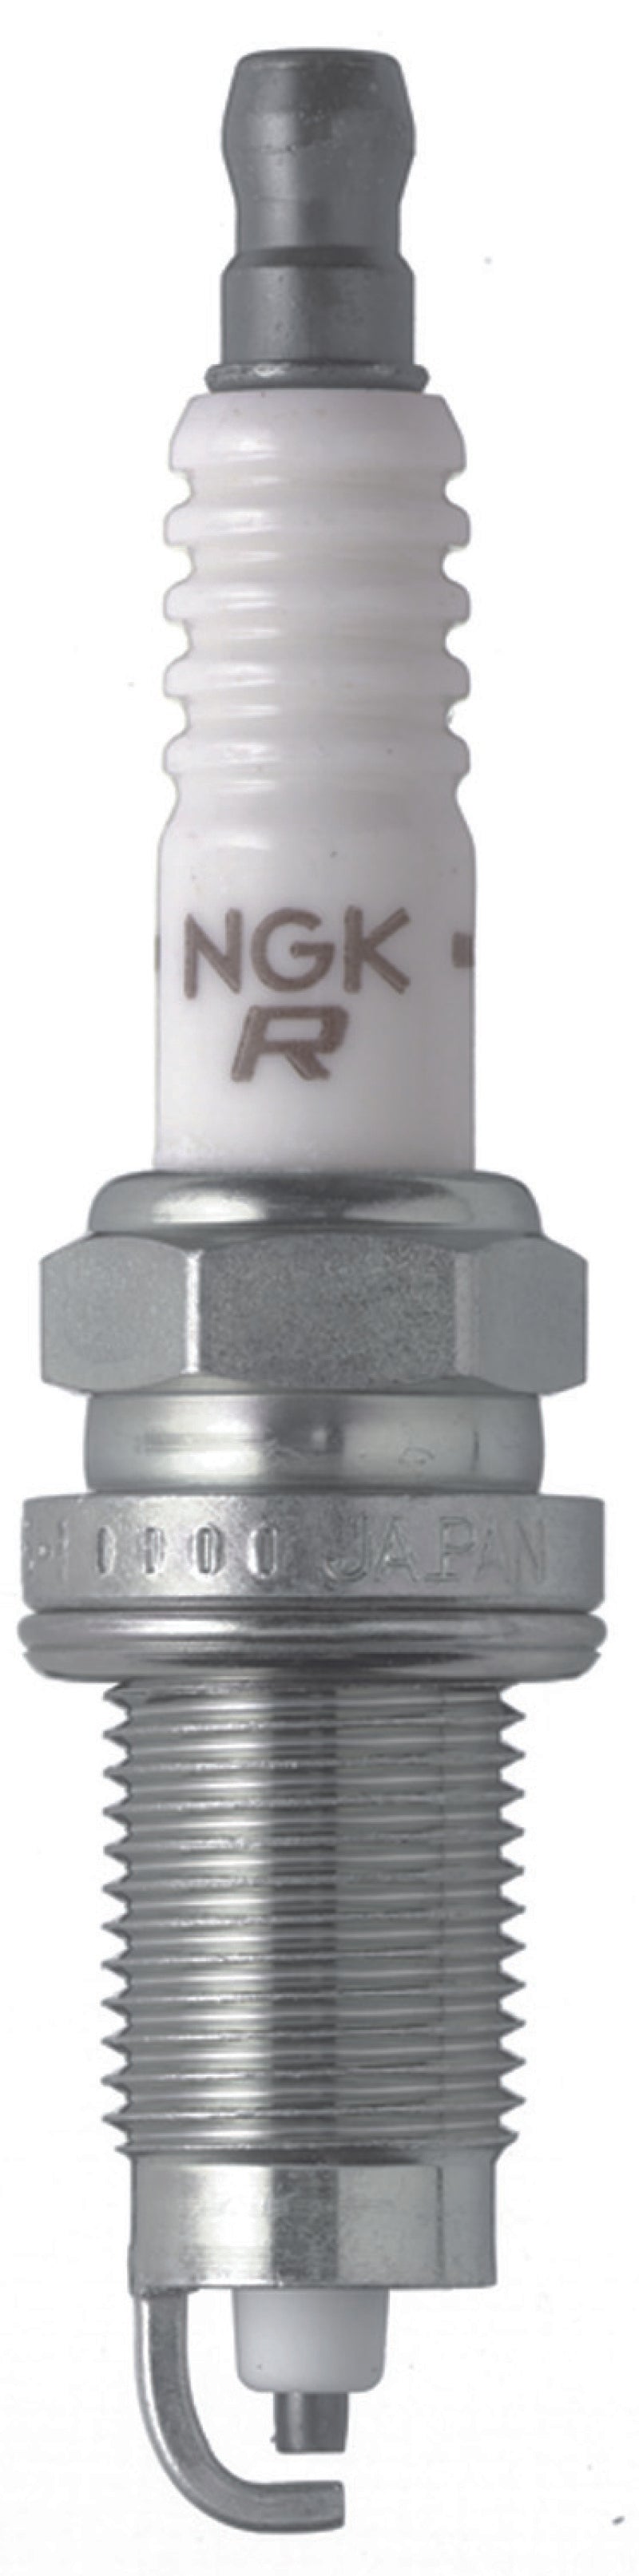 NGK V-Power Spark Plug Box of 4 (FR5-1)